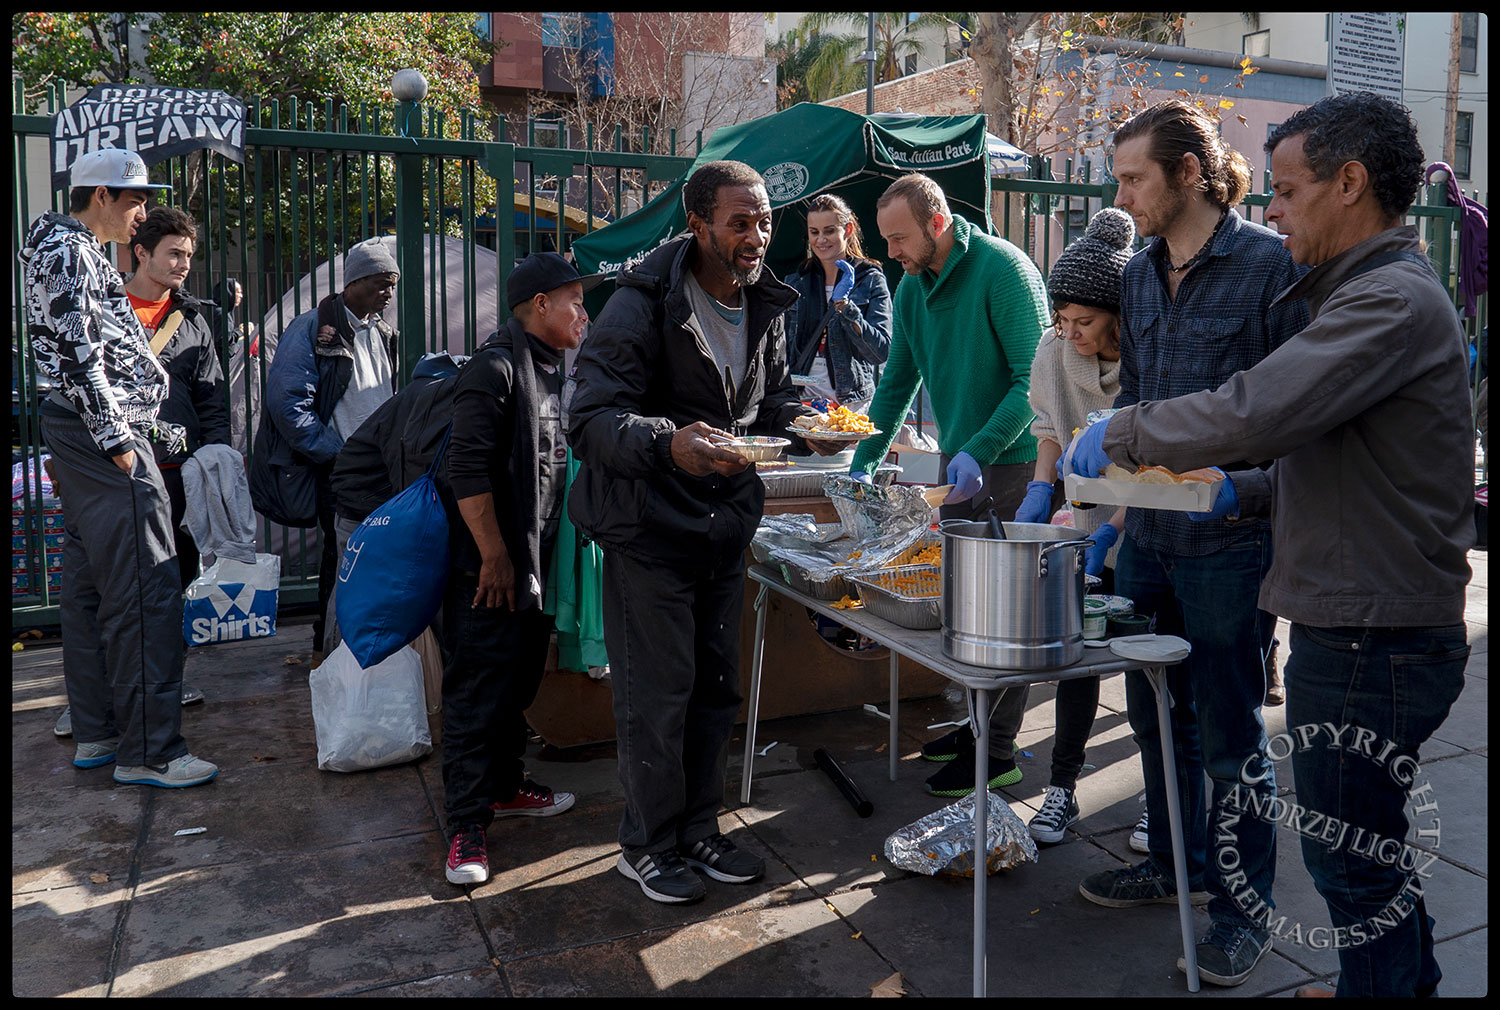 Feeding the homeless, San Julian Park, Skid Row. LA, Christmas Day 2018